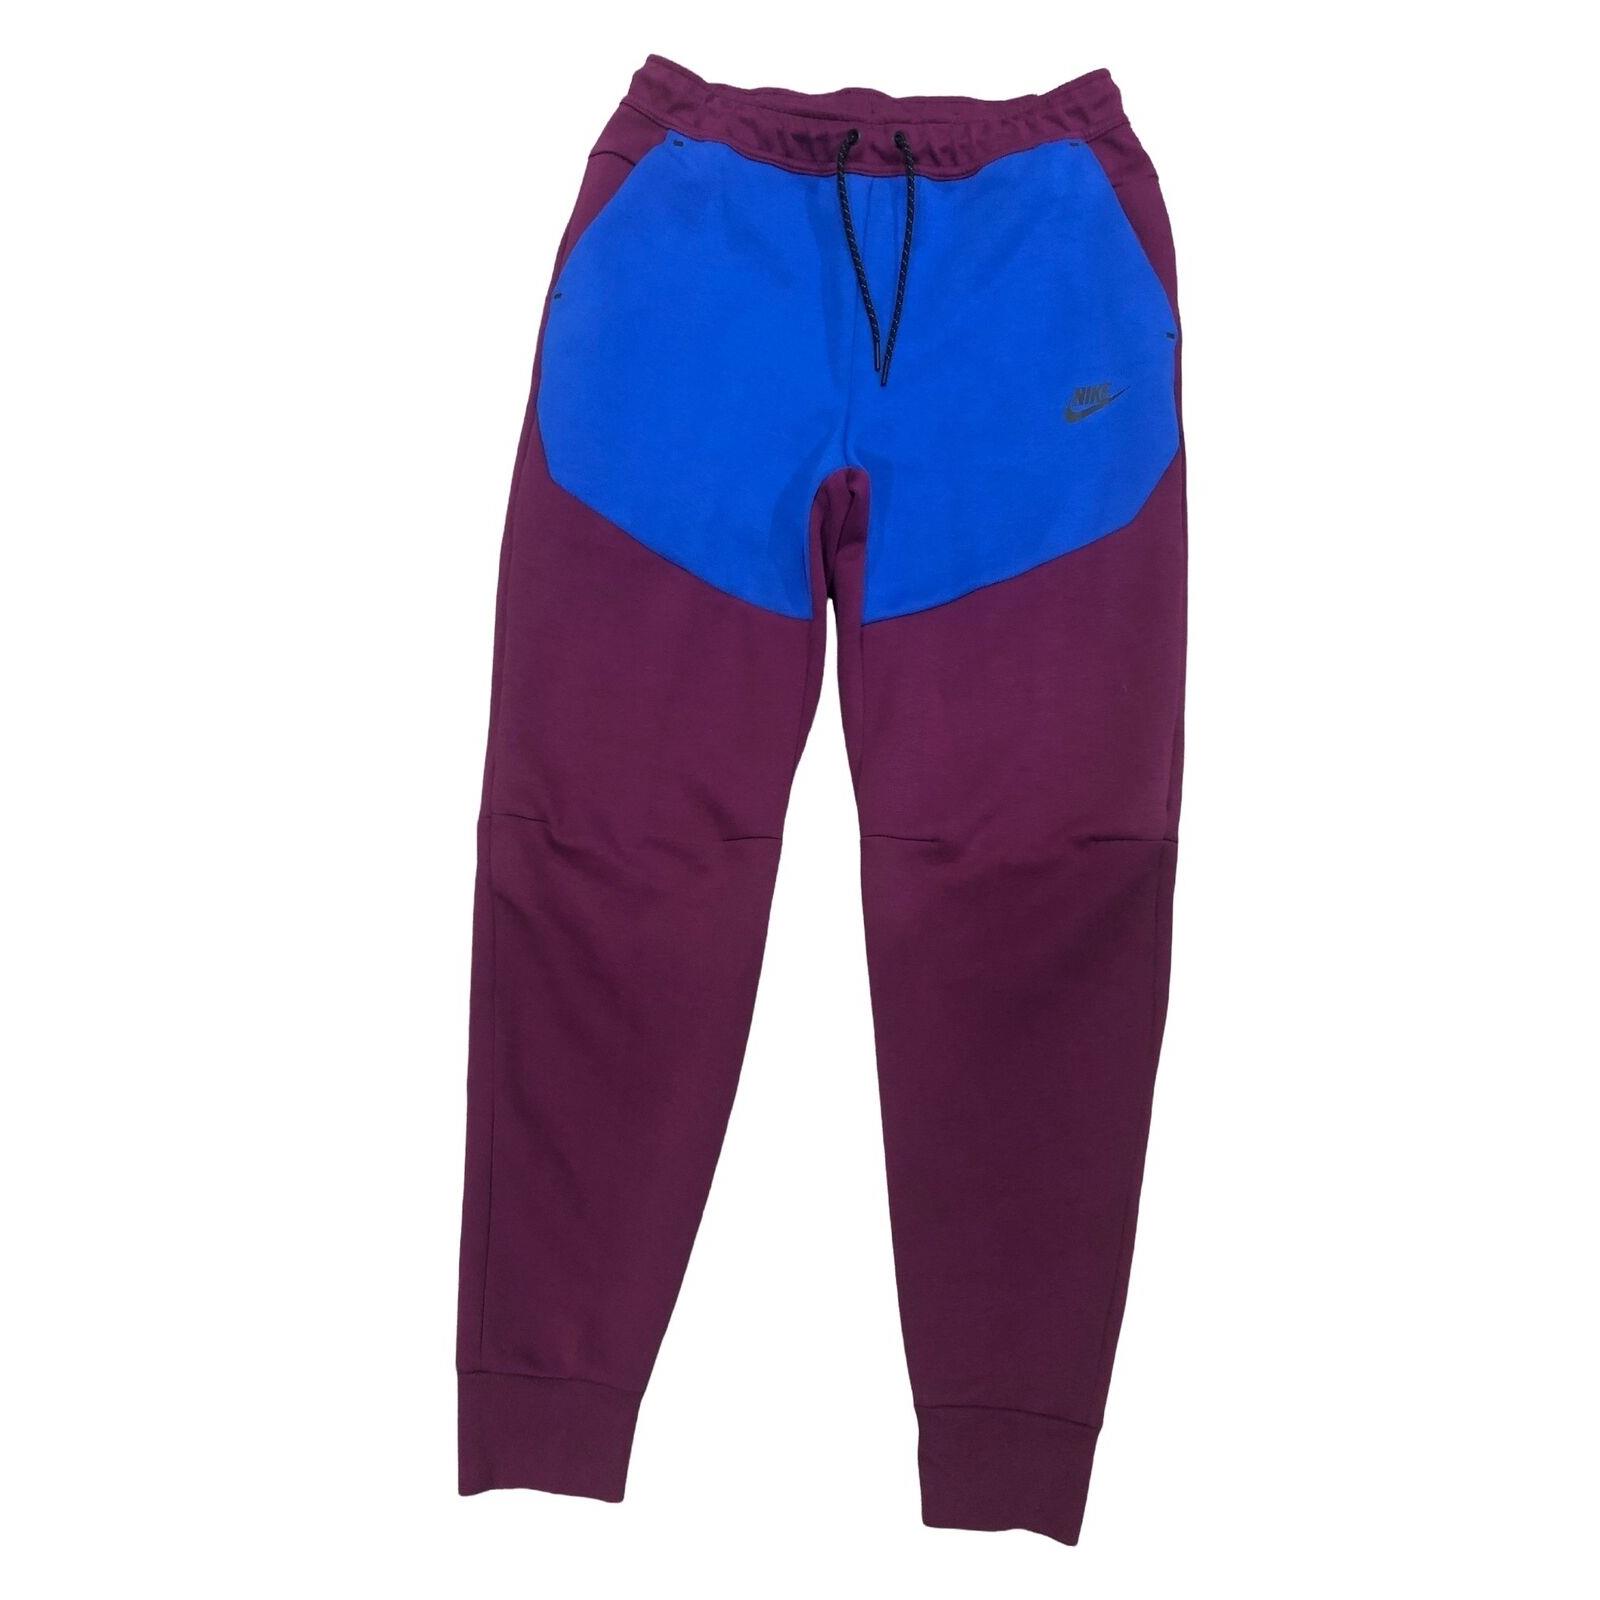 Nike Tech Fleece Pants Joggers Slim Fit Maroon Blue Mens XL CU4495 610